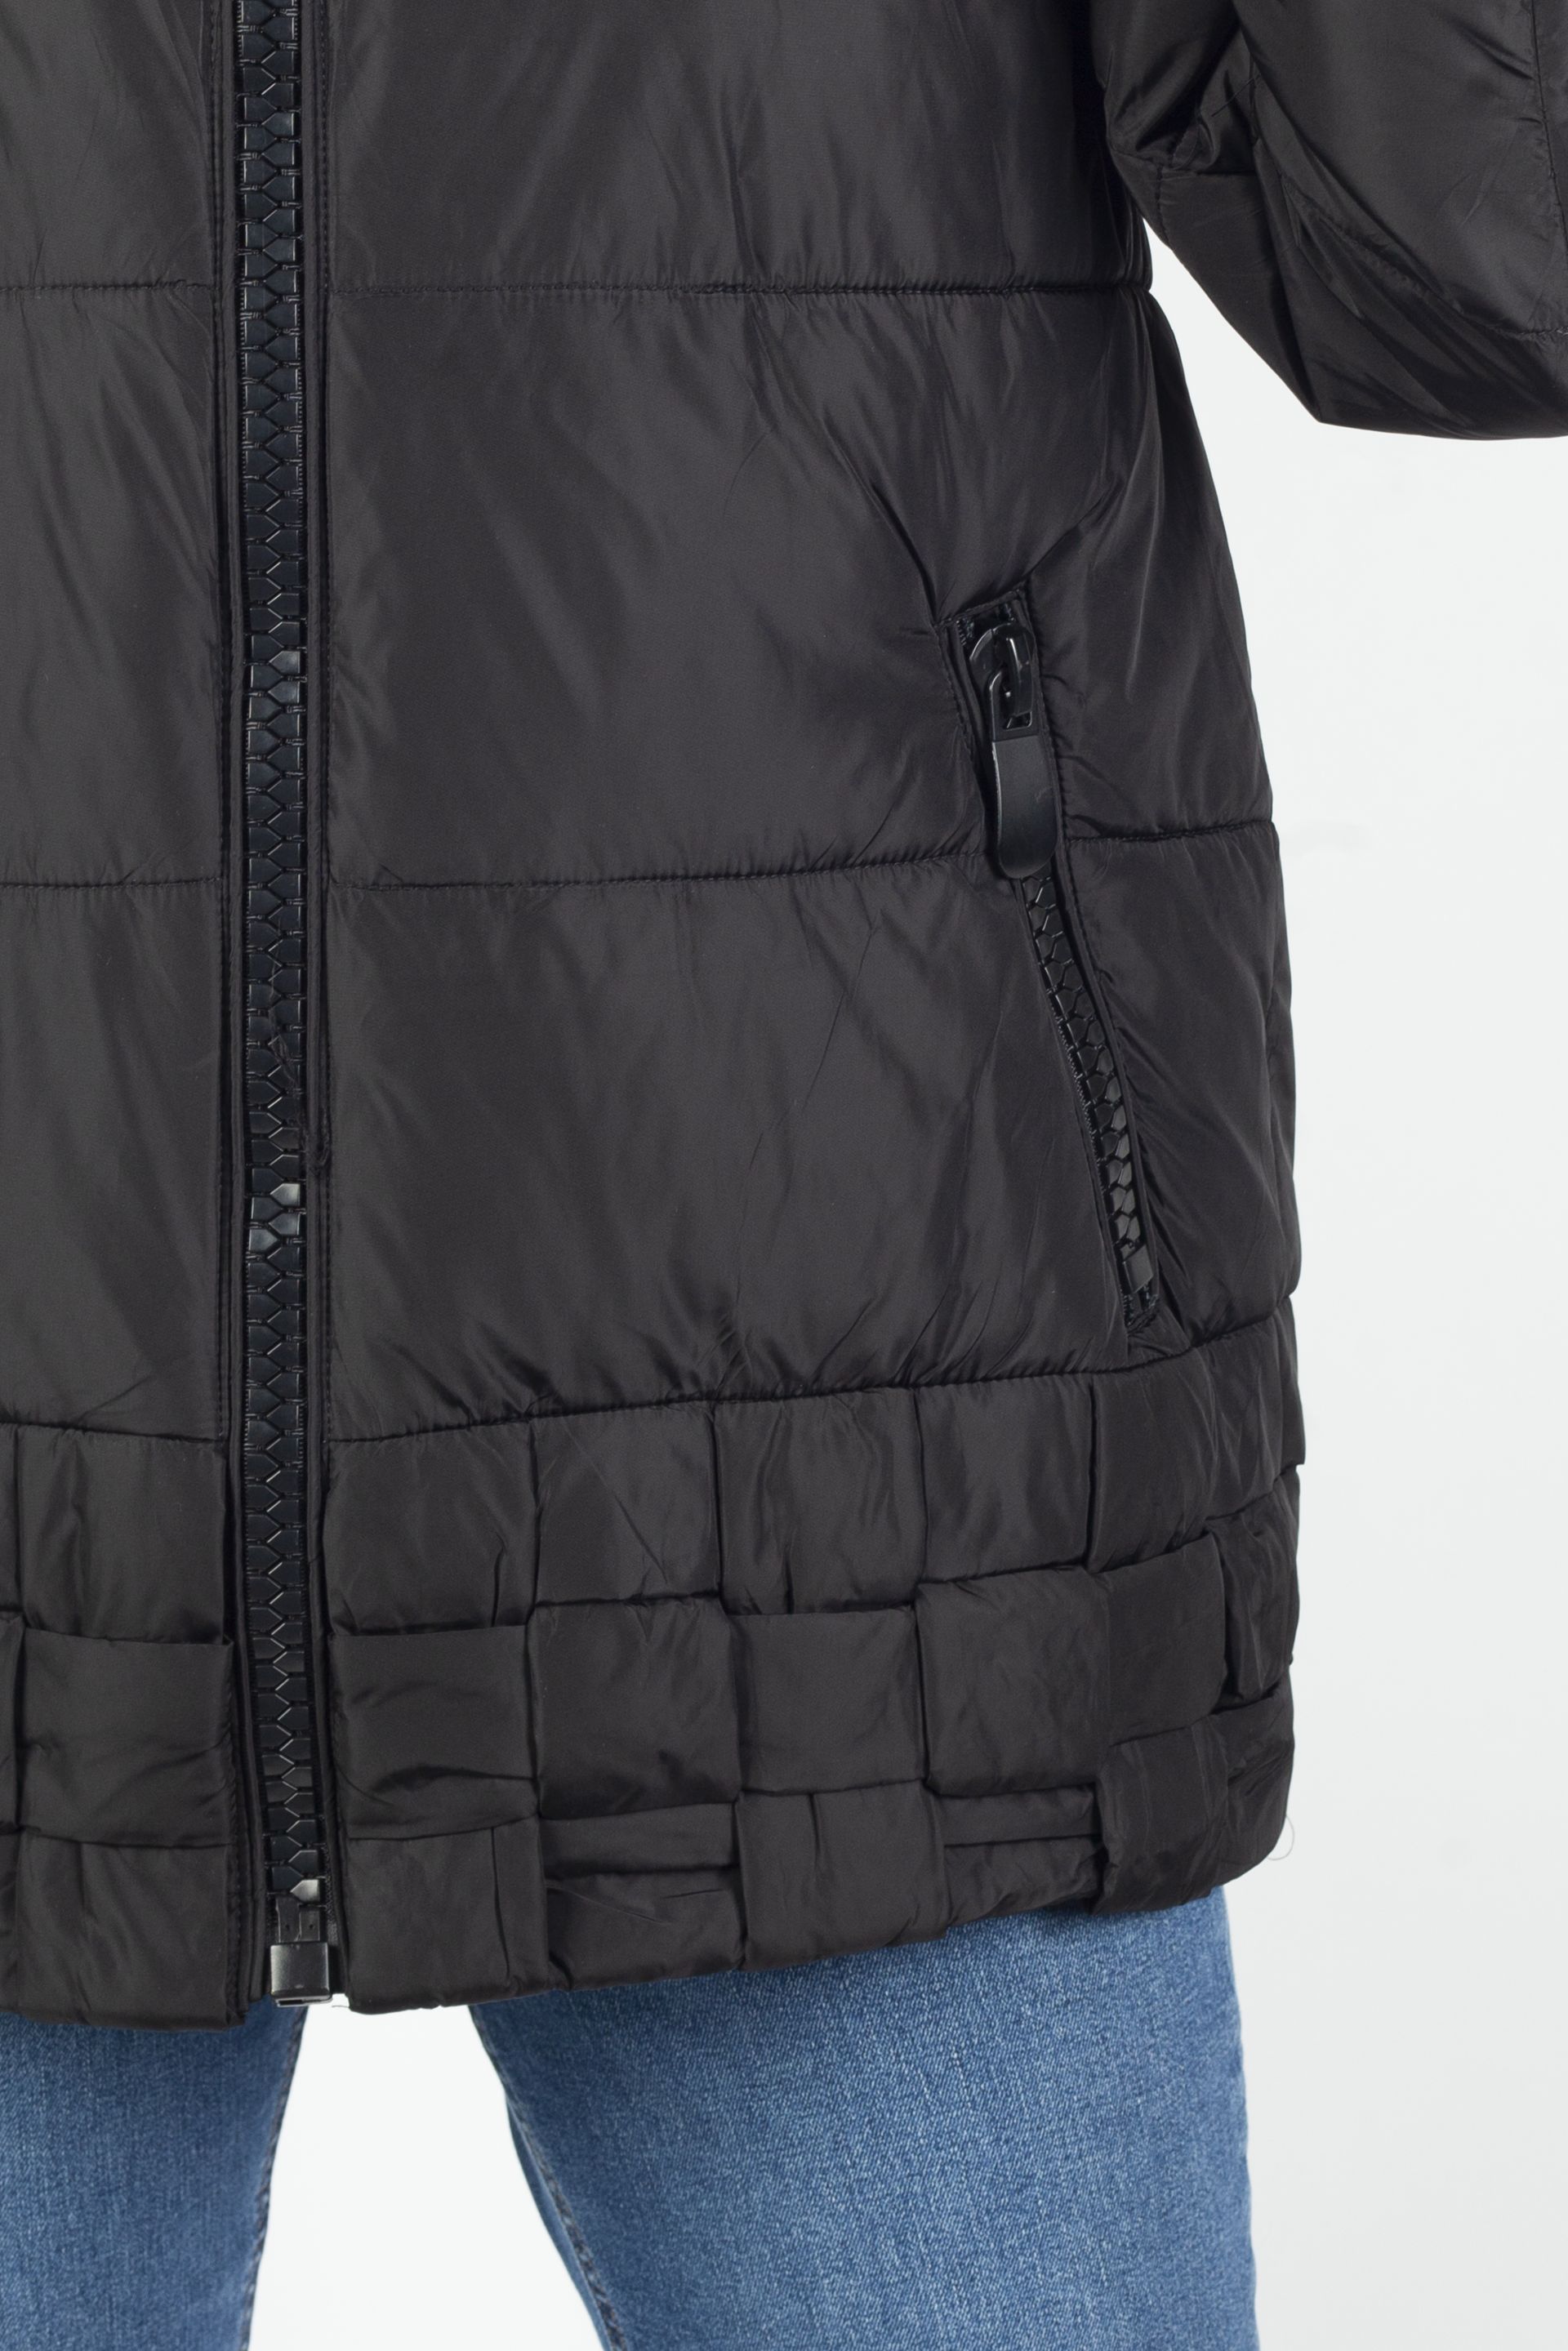 Winter jacket FLY 2106-BLACK